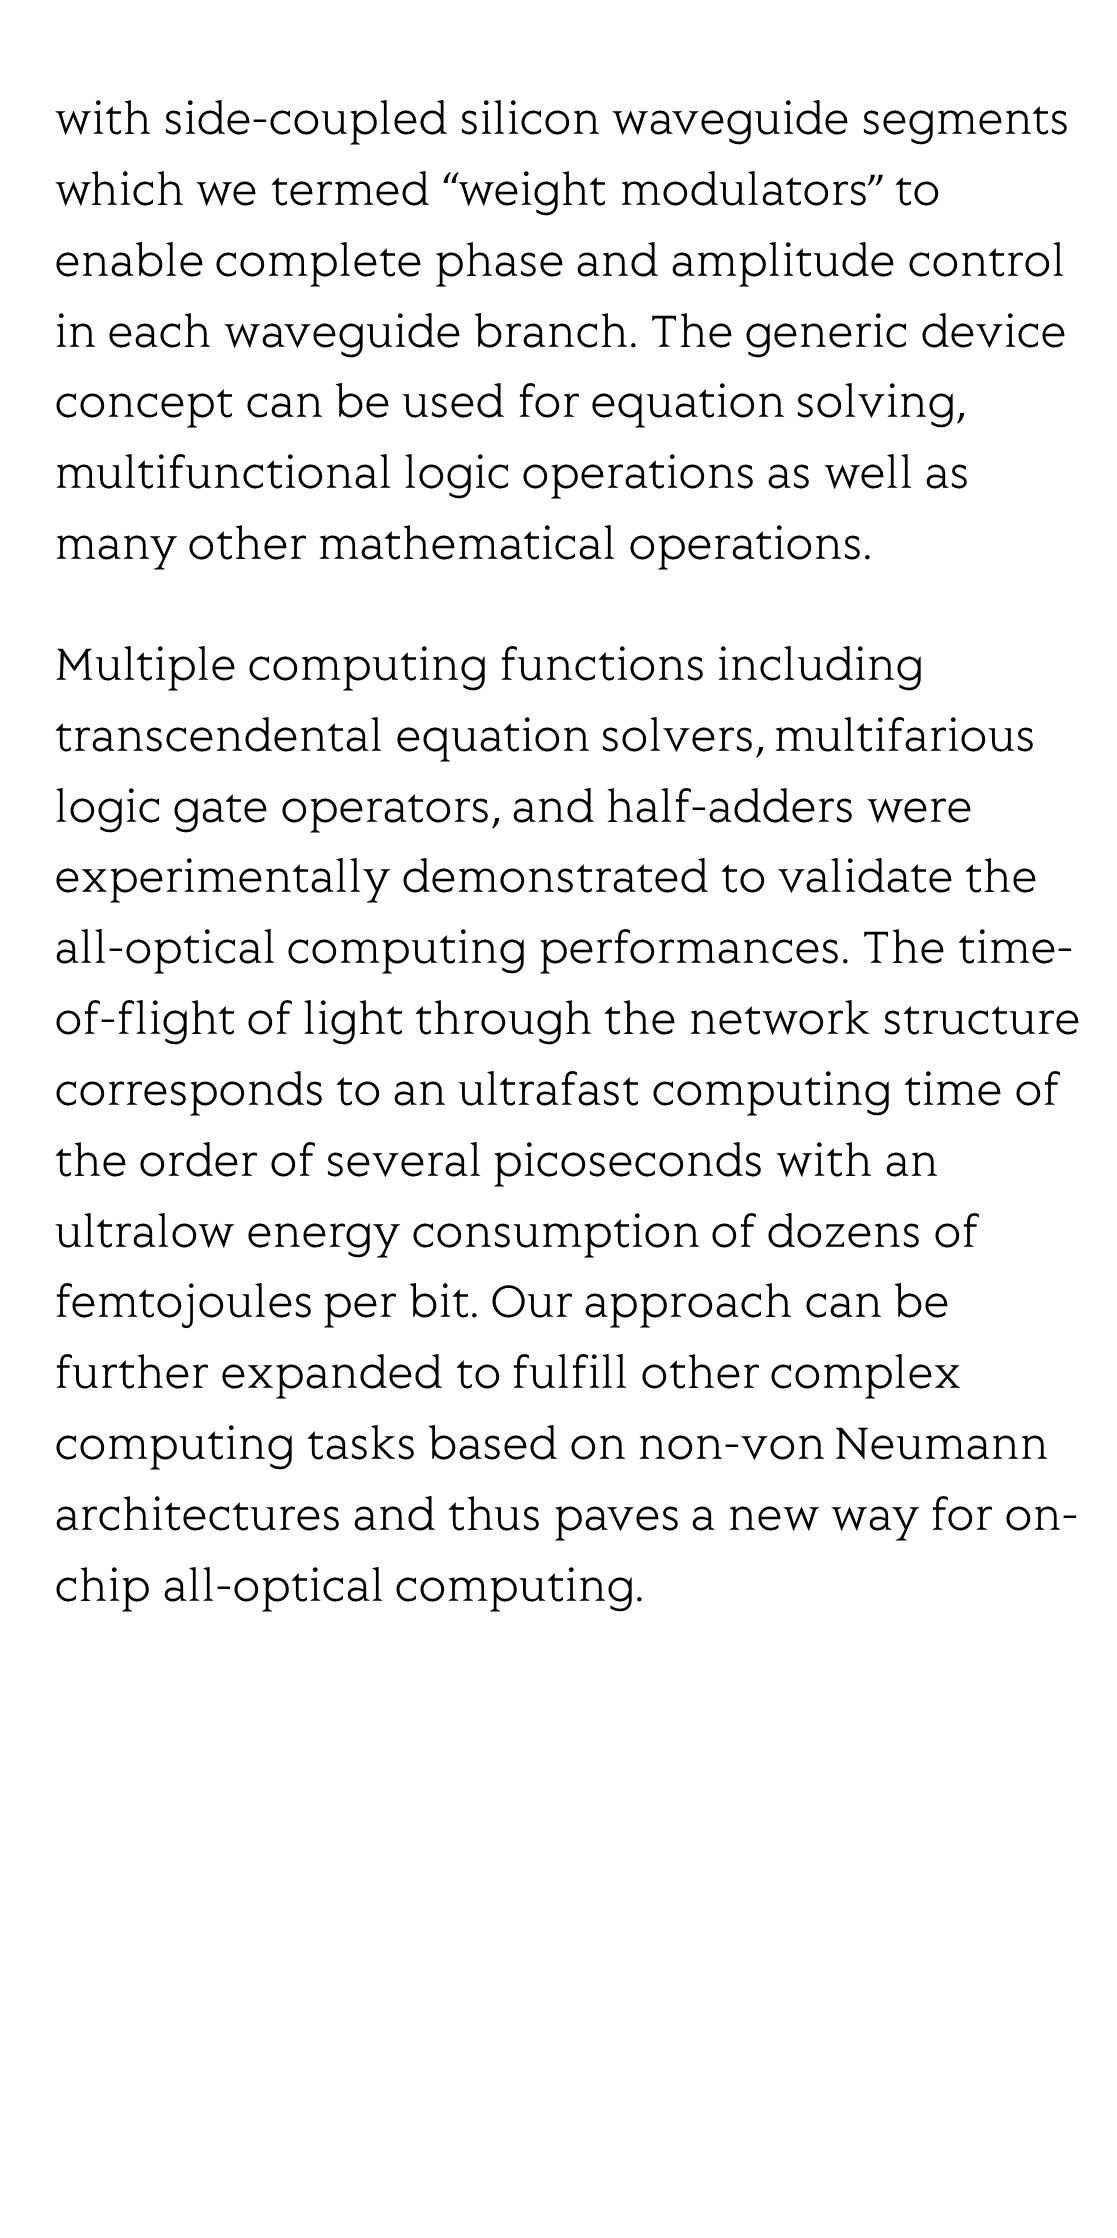 All-optical computing based on convolutional neural networks_3